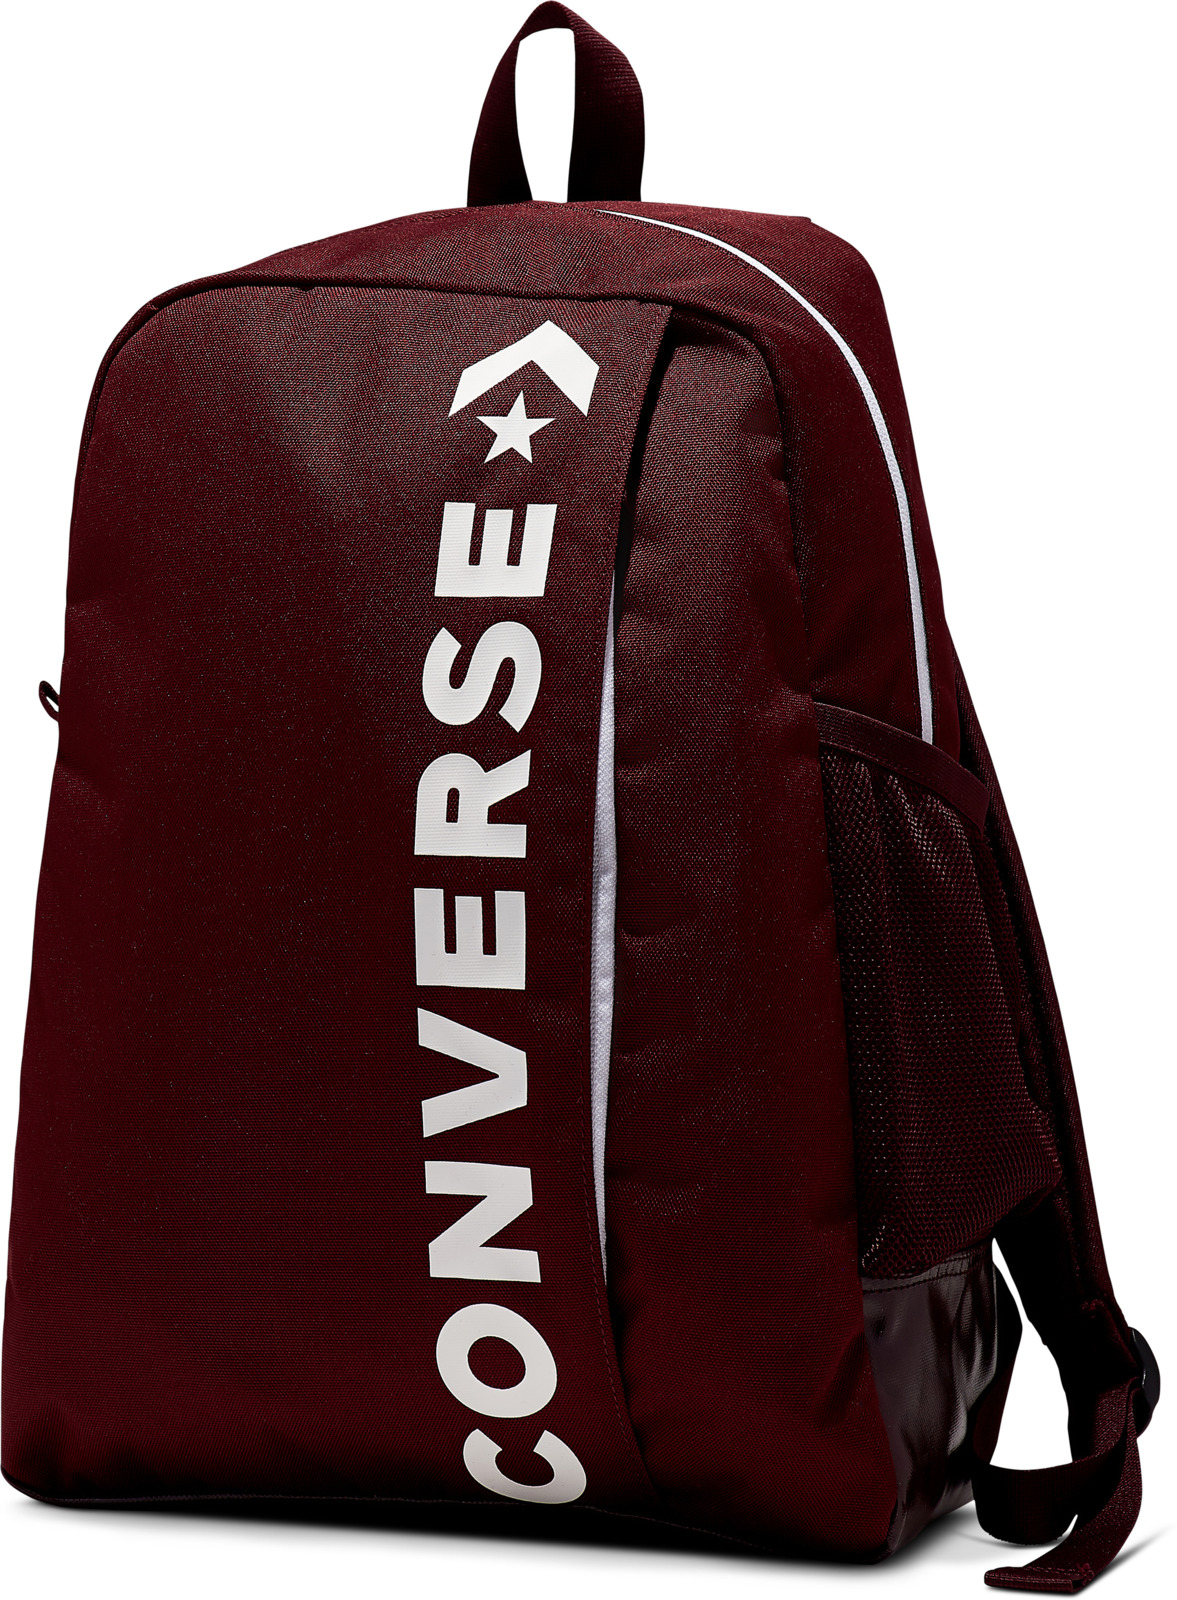 Рюкзак Converse Speed 2 Backpack, 10008286613, бордовый